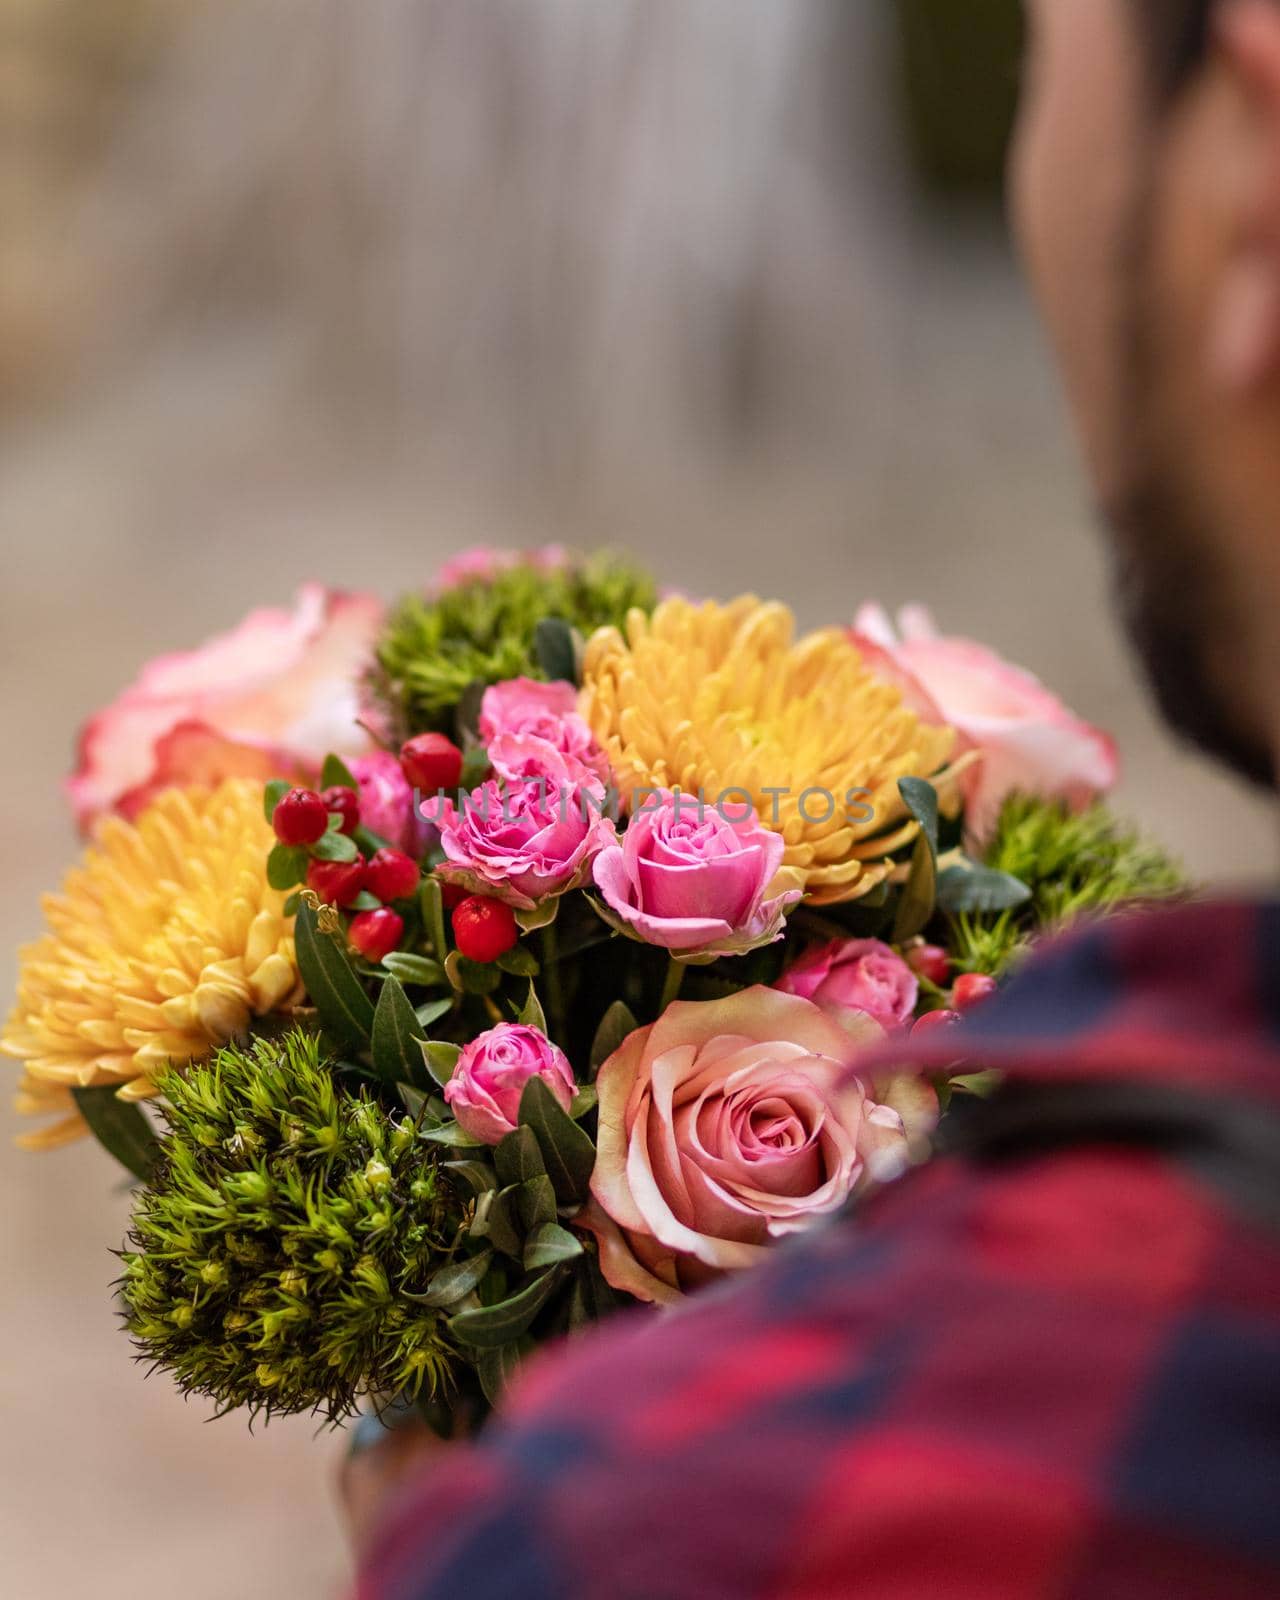 Florist holding flower bouquet